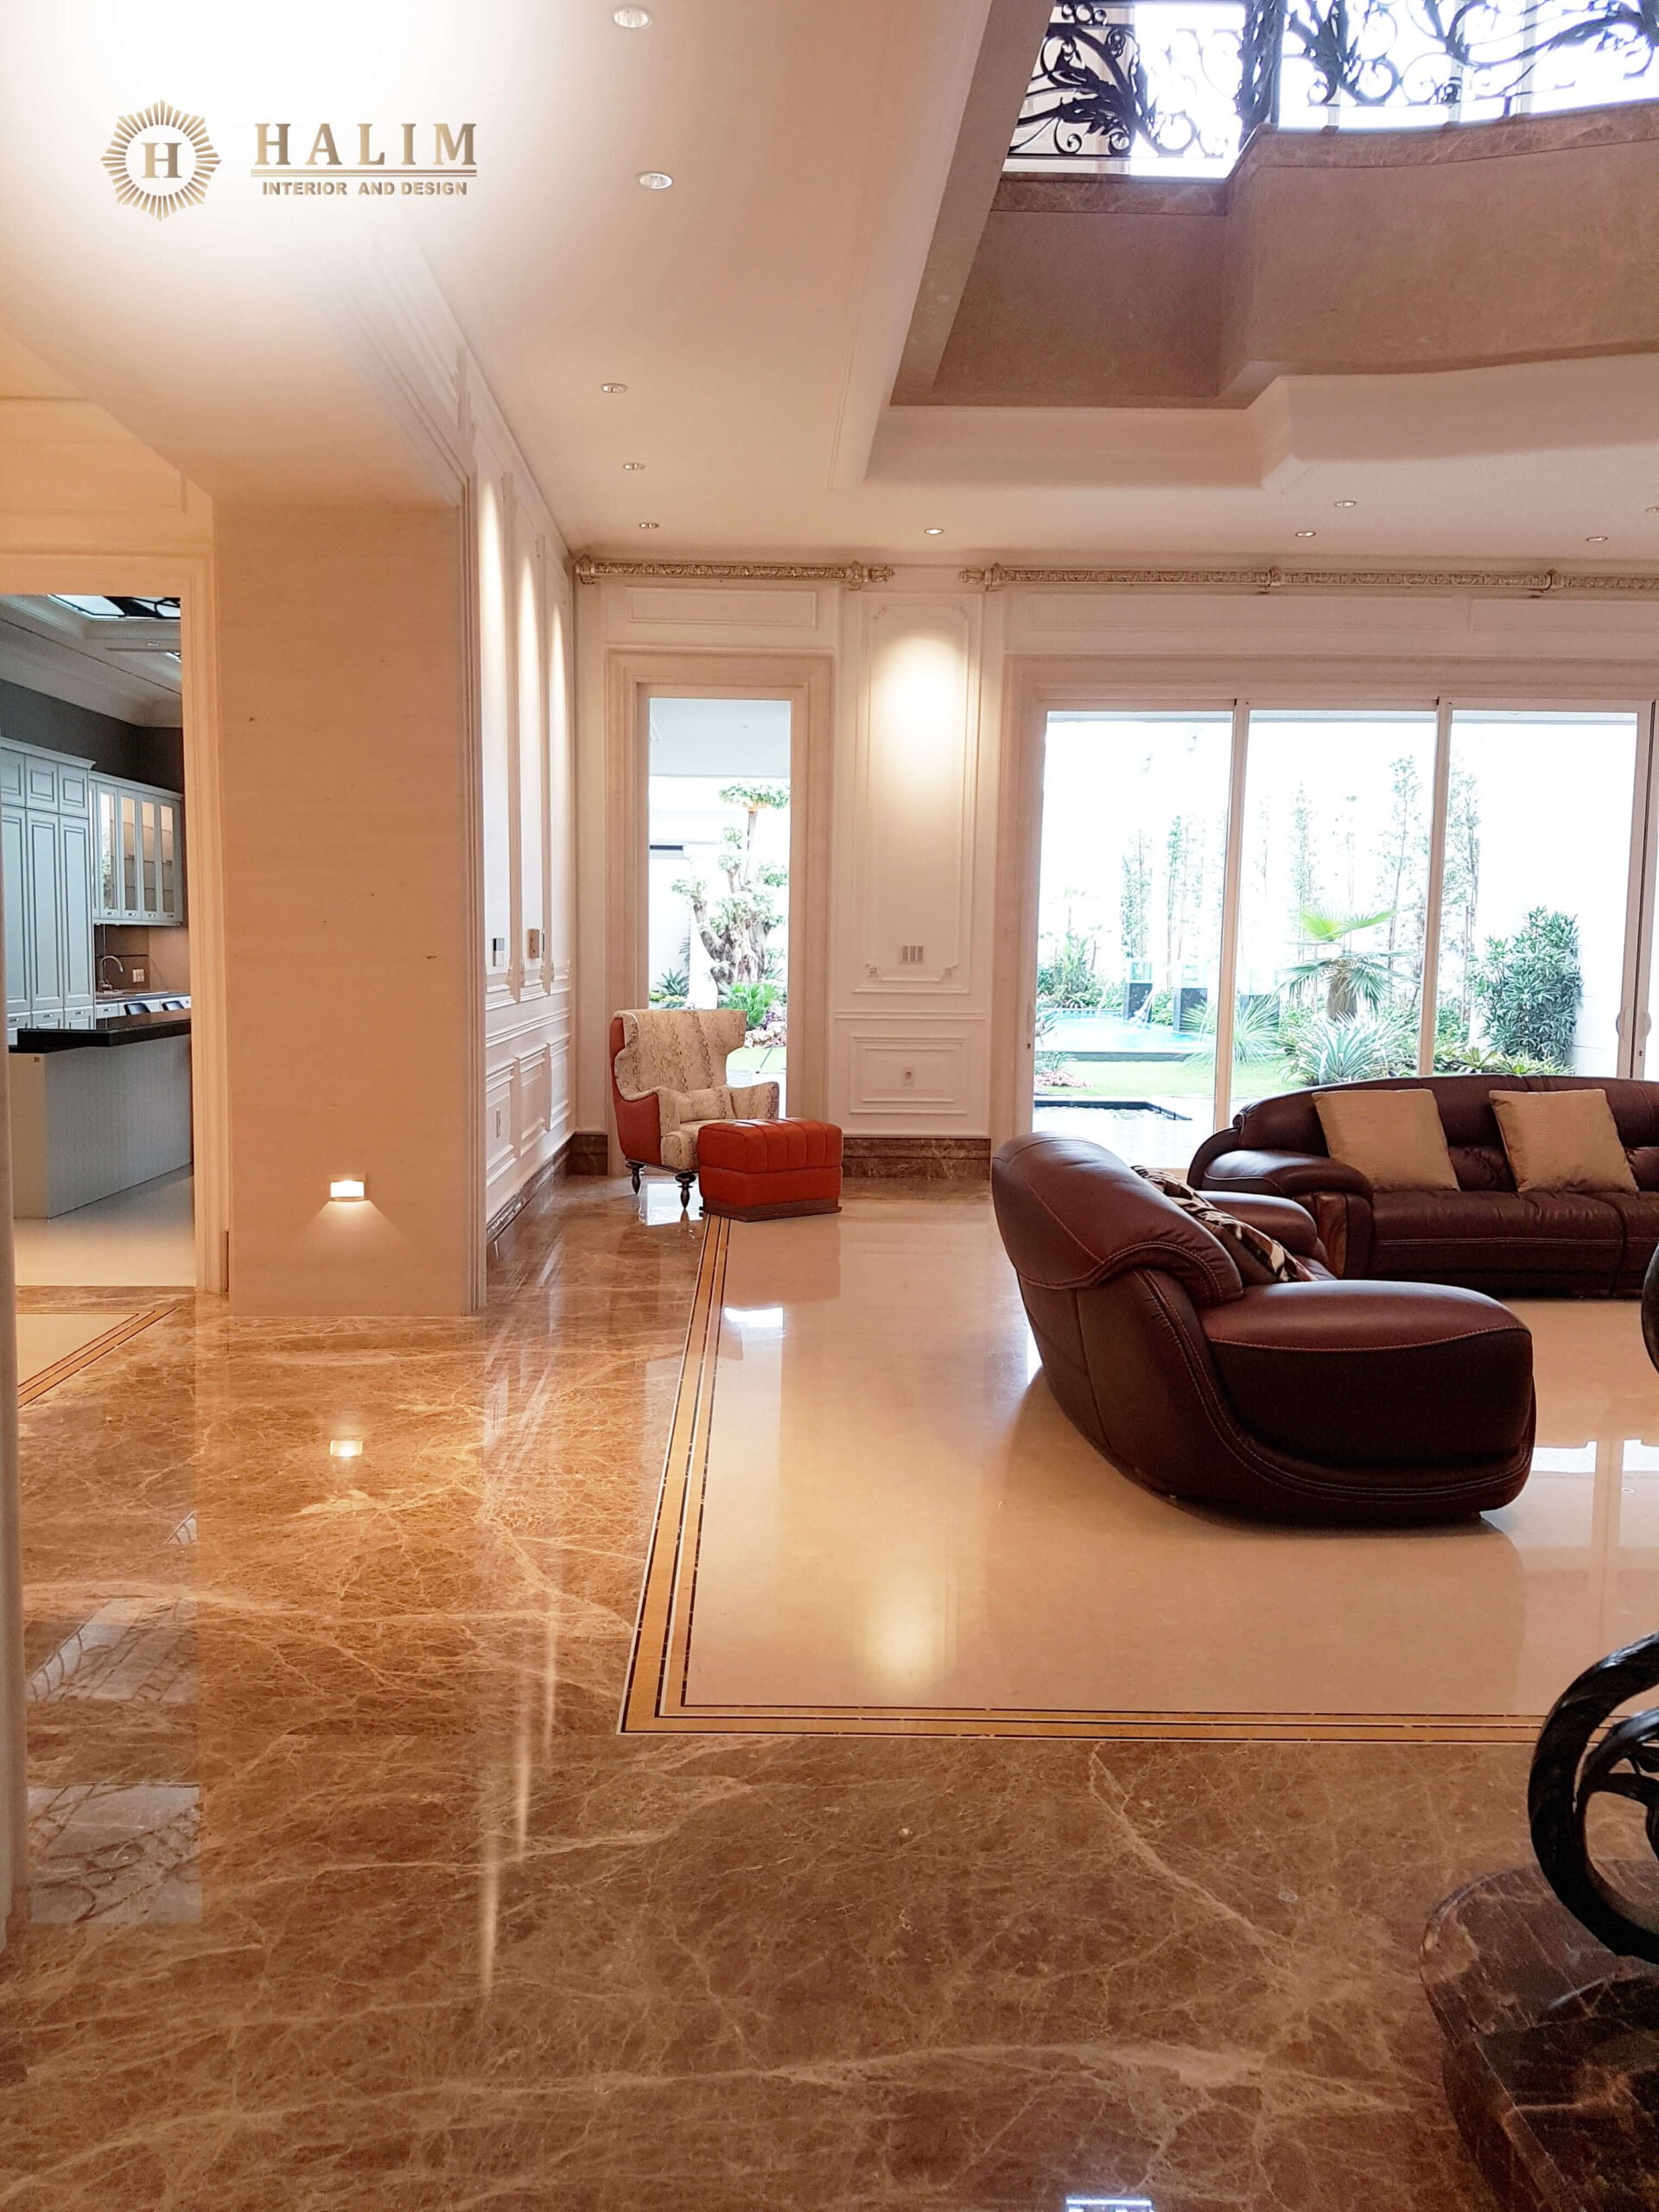 Halim Interior modern furniture contemporer american style minimalist european classic surabaya Kertajaya 2B. Ruang Keluarga Lt 1 scaled